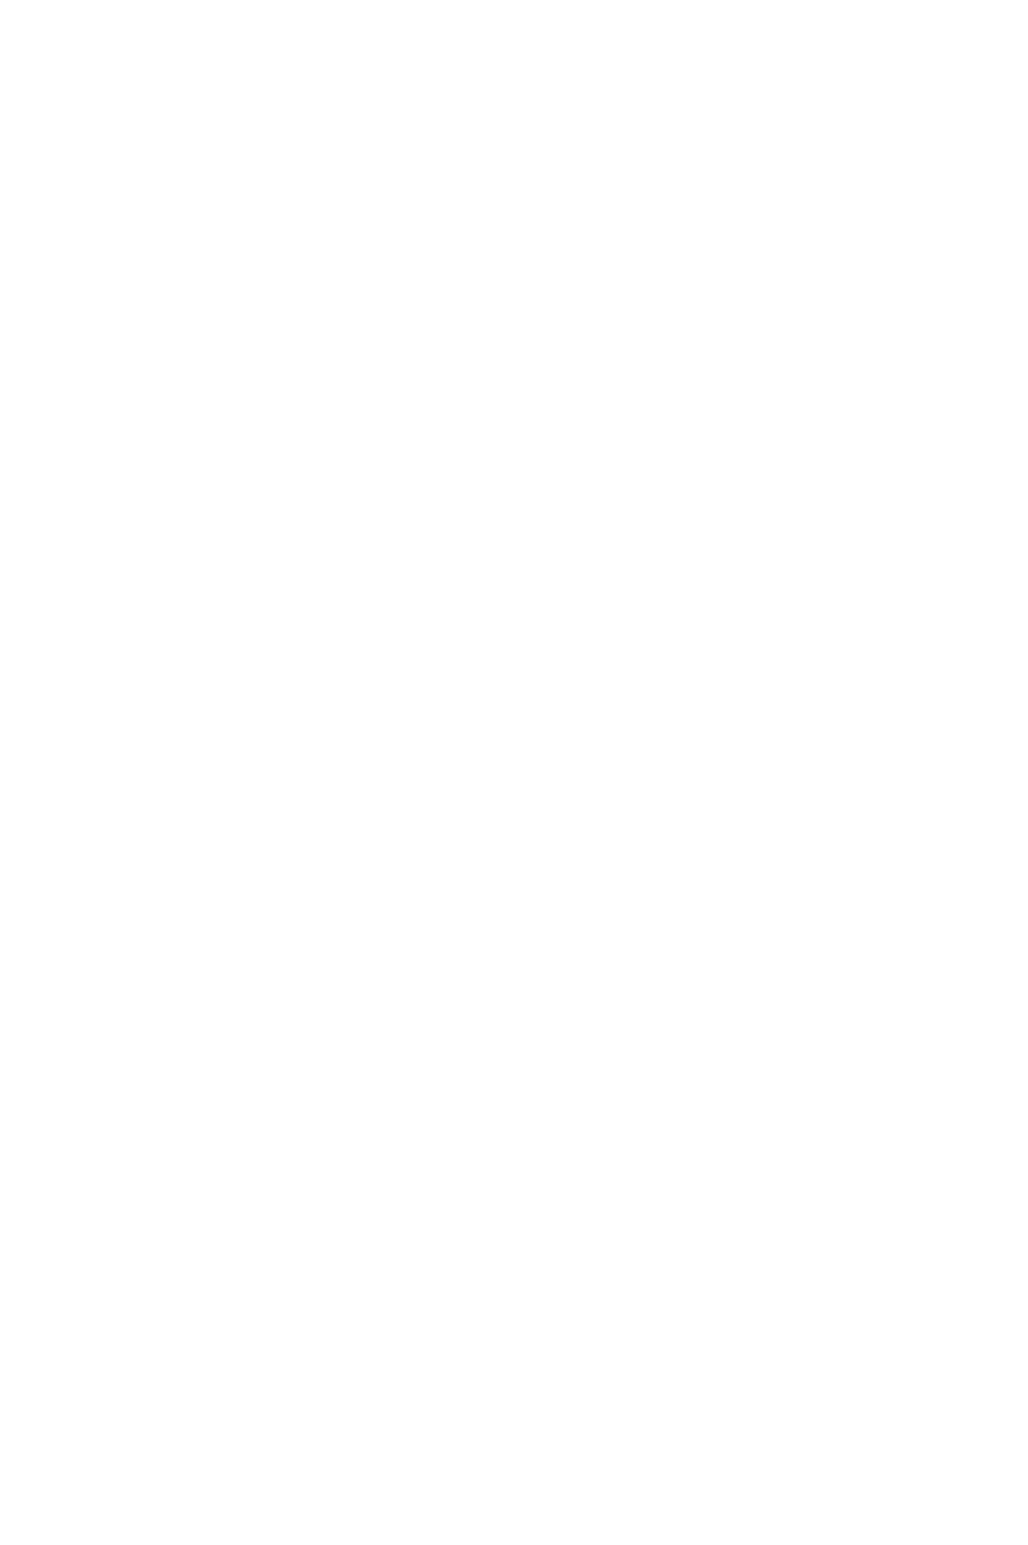 Playstudios logo large for dark backgrounds (transparent PNG)